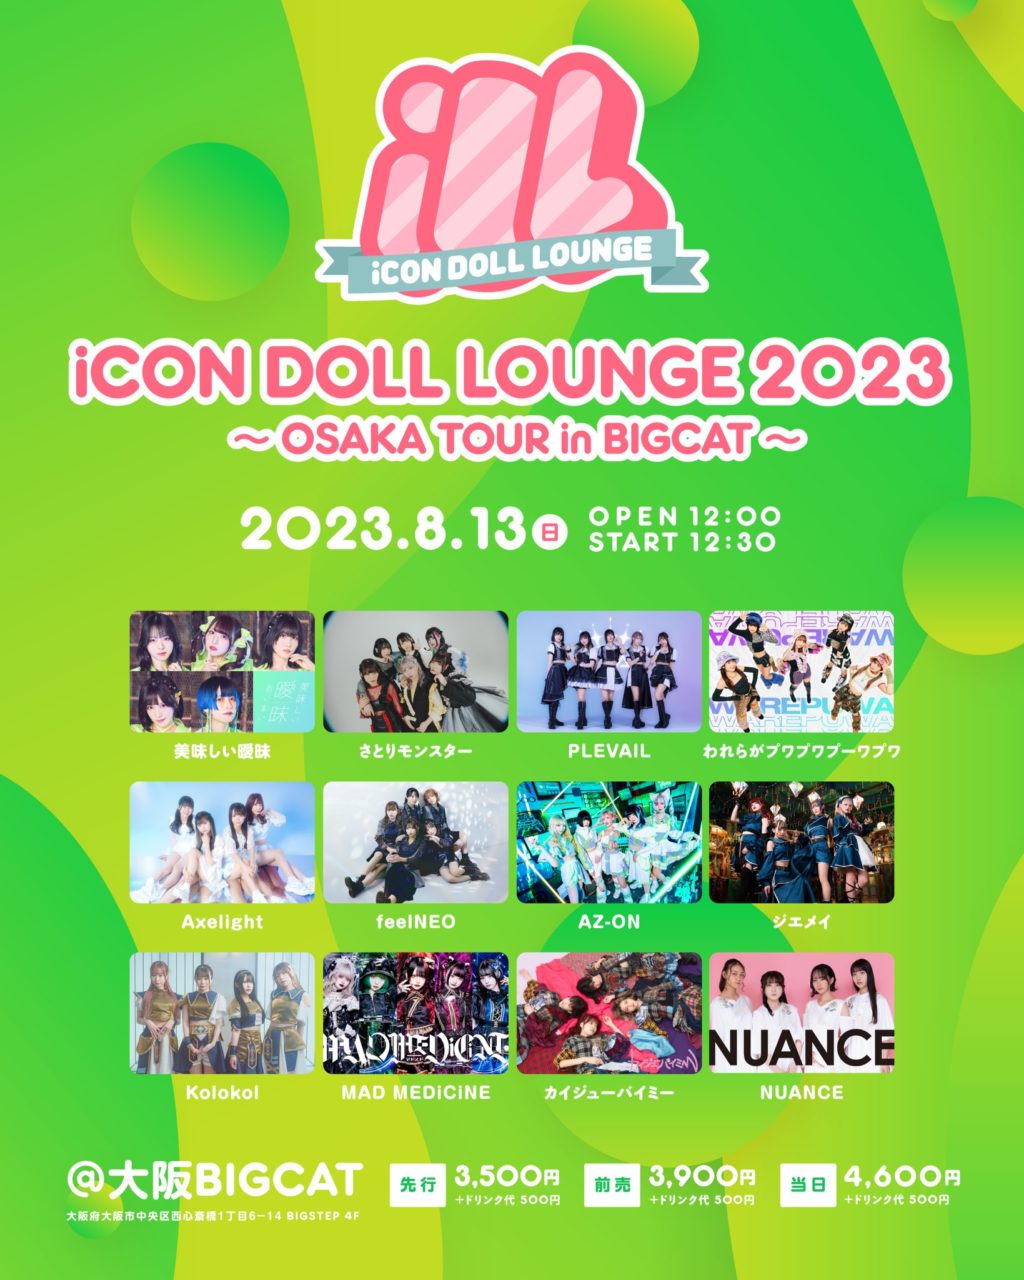 『iCON DOLL LOUNGE 2023』 ～ OSAKA TOUR in BIGCAT ～